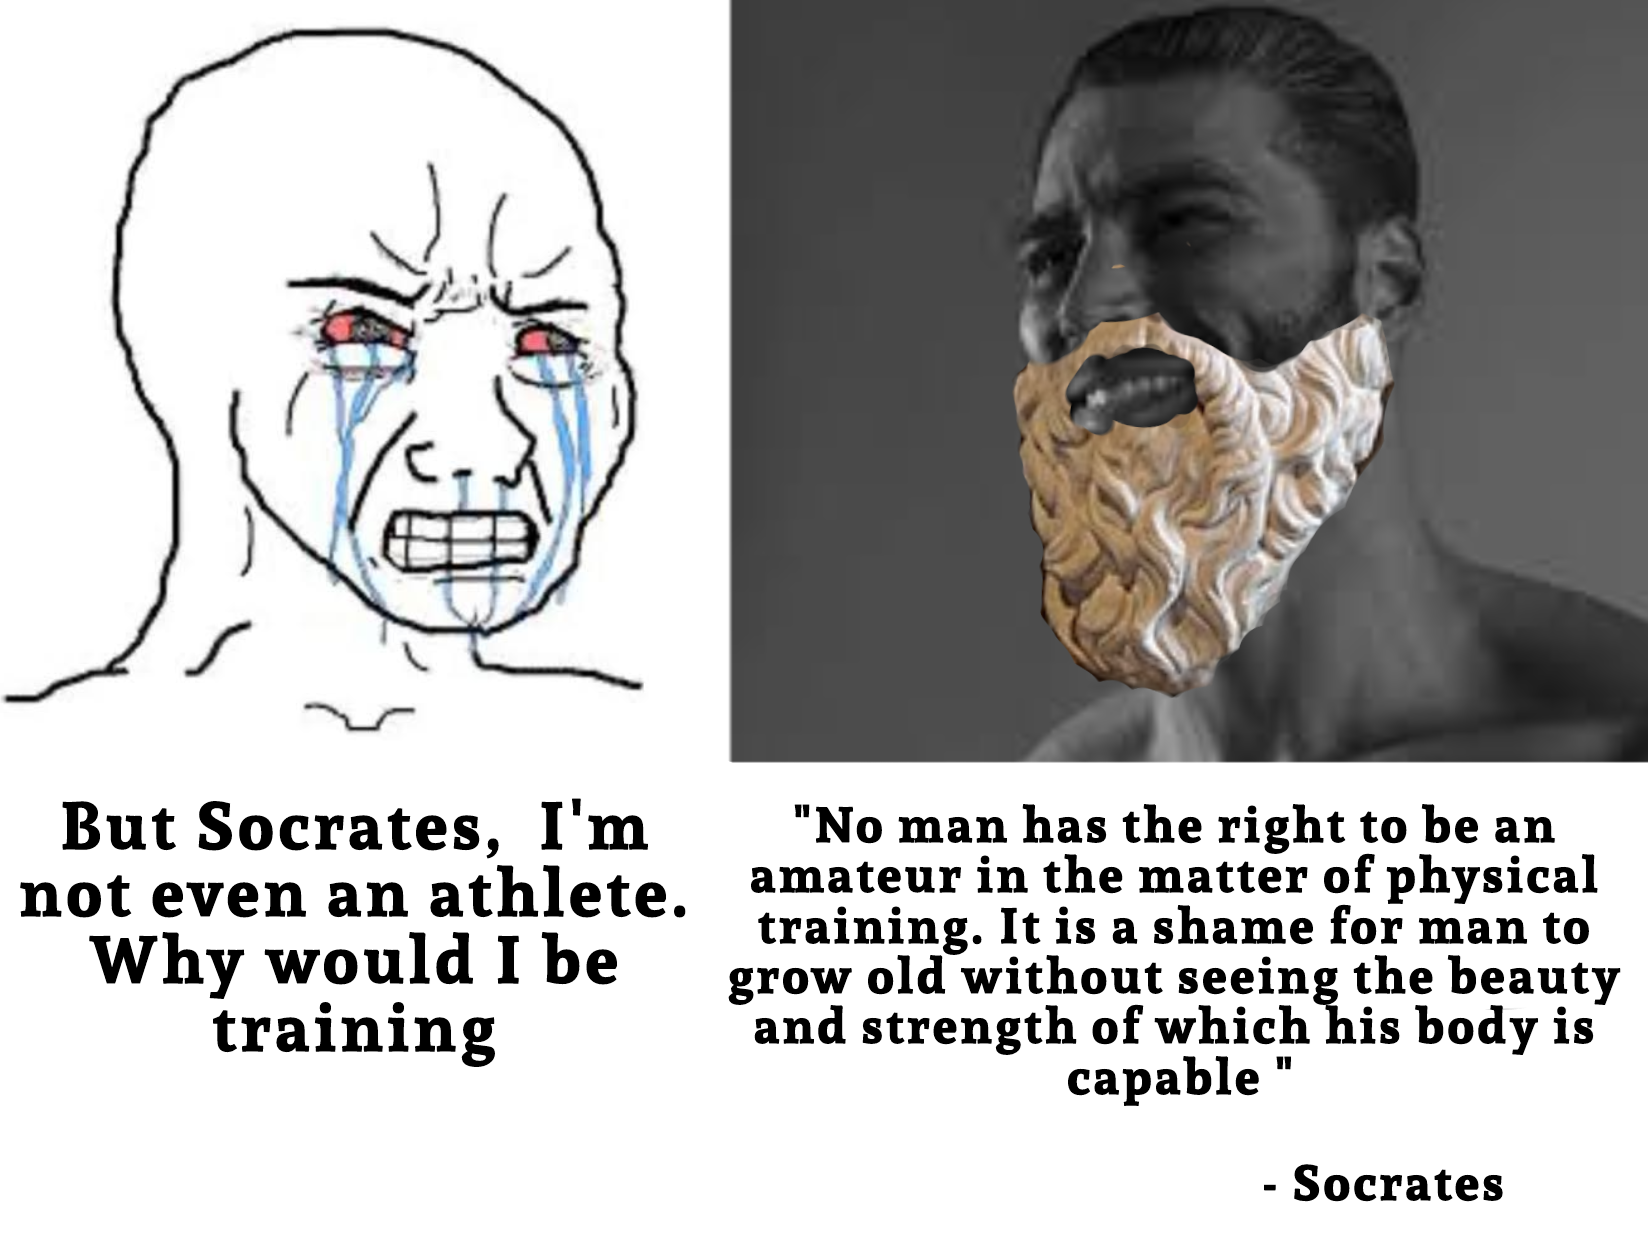 Socrates, the true chad